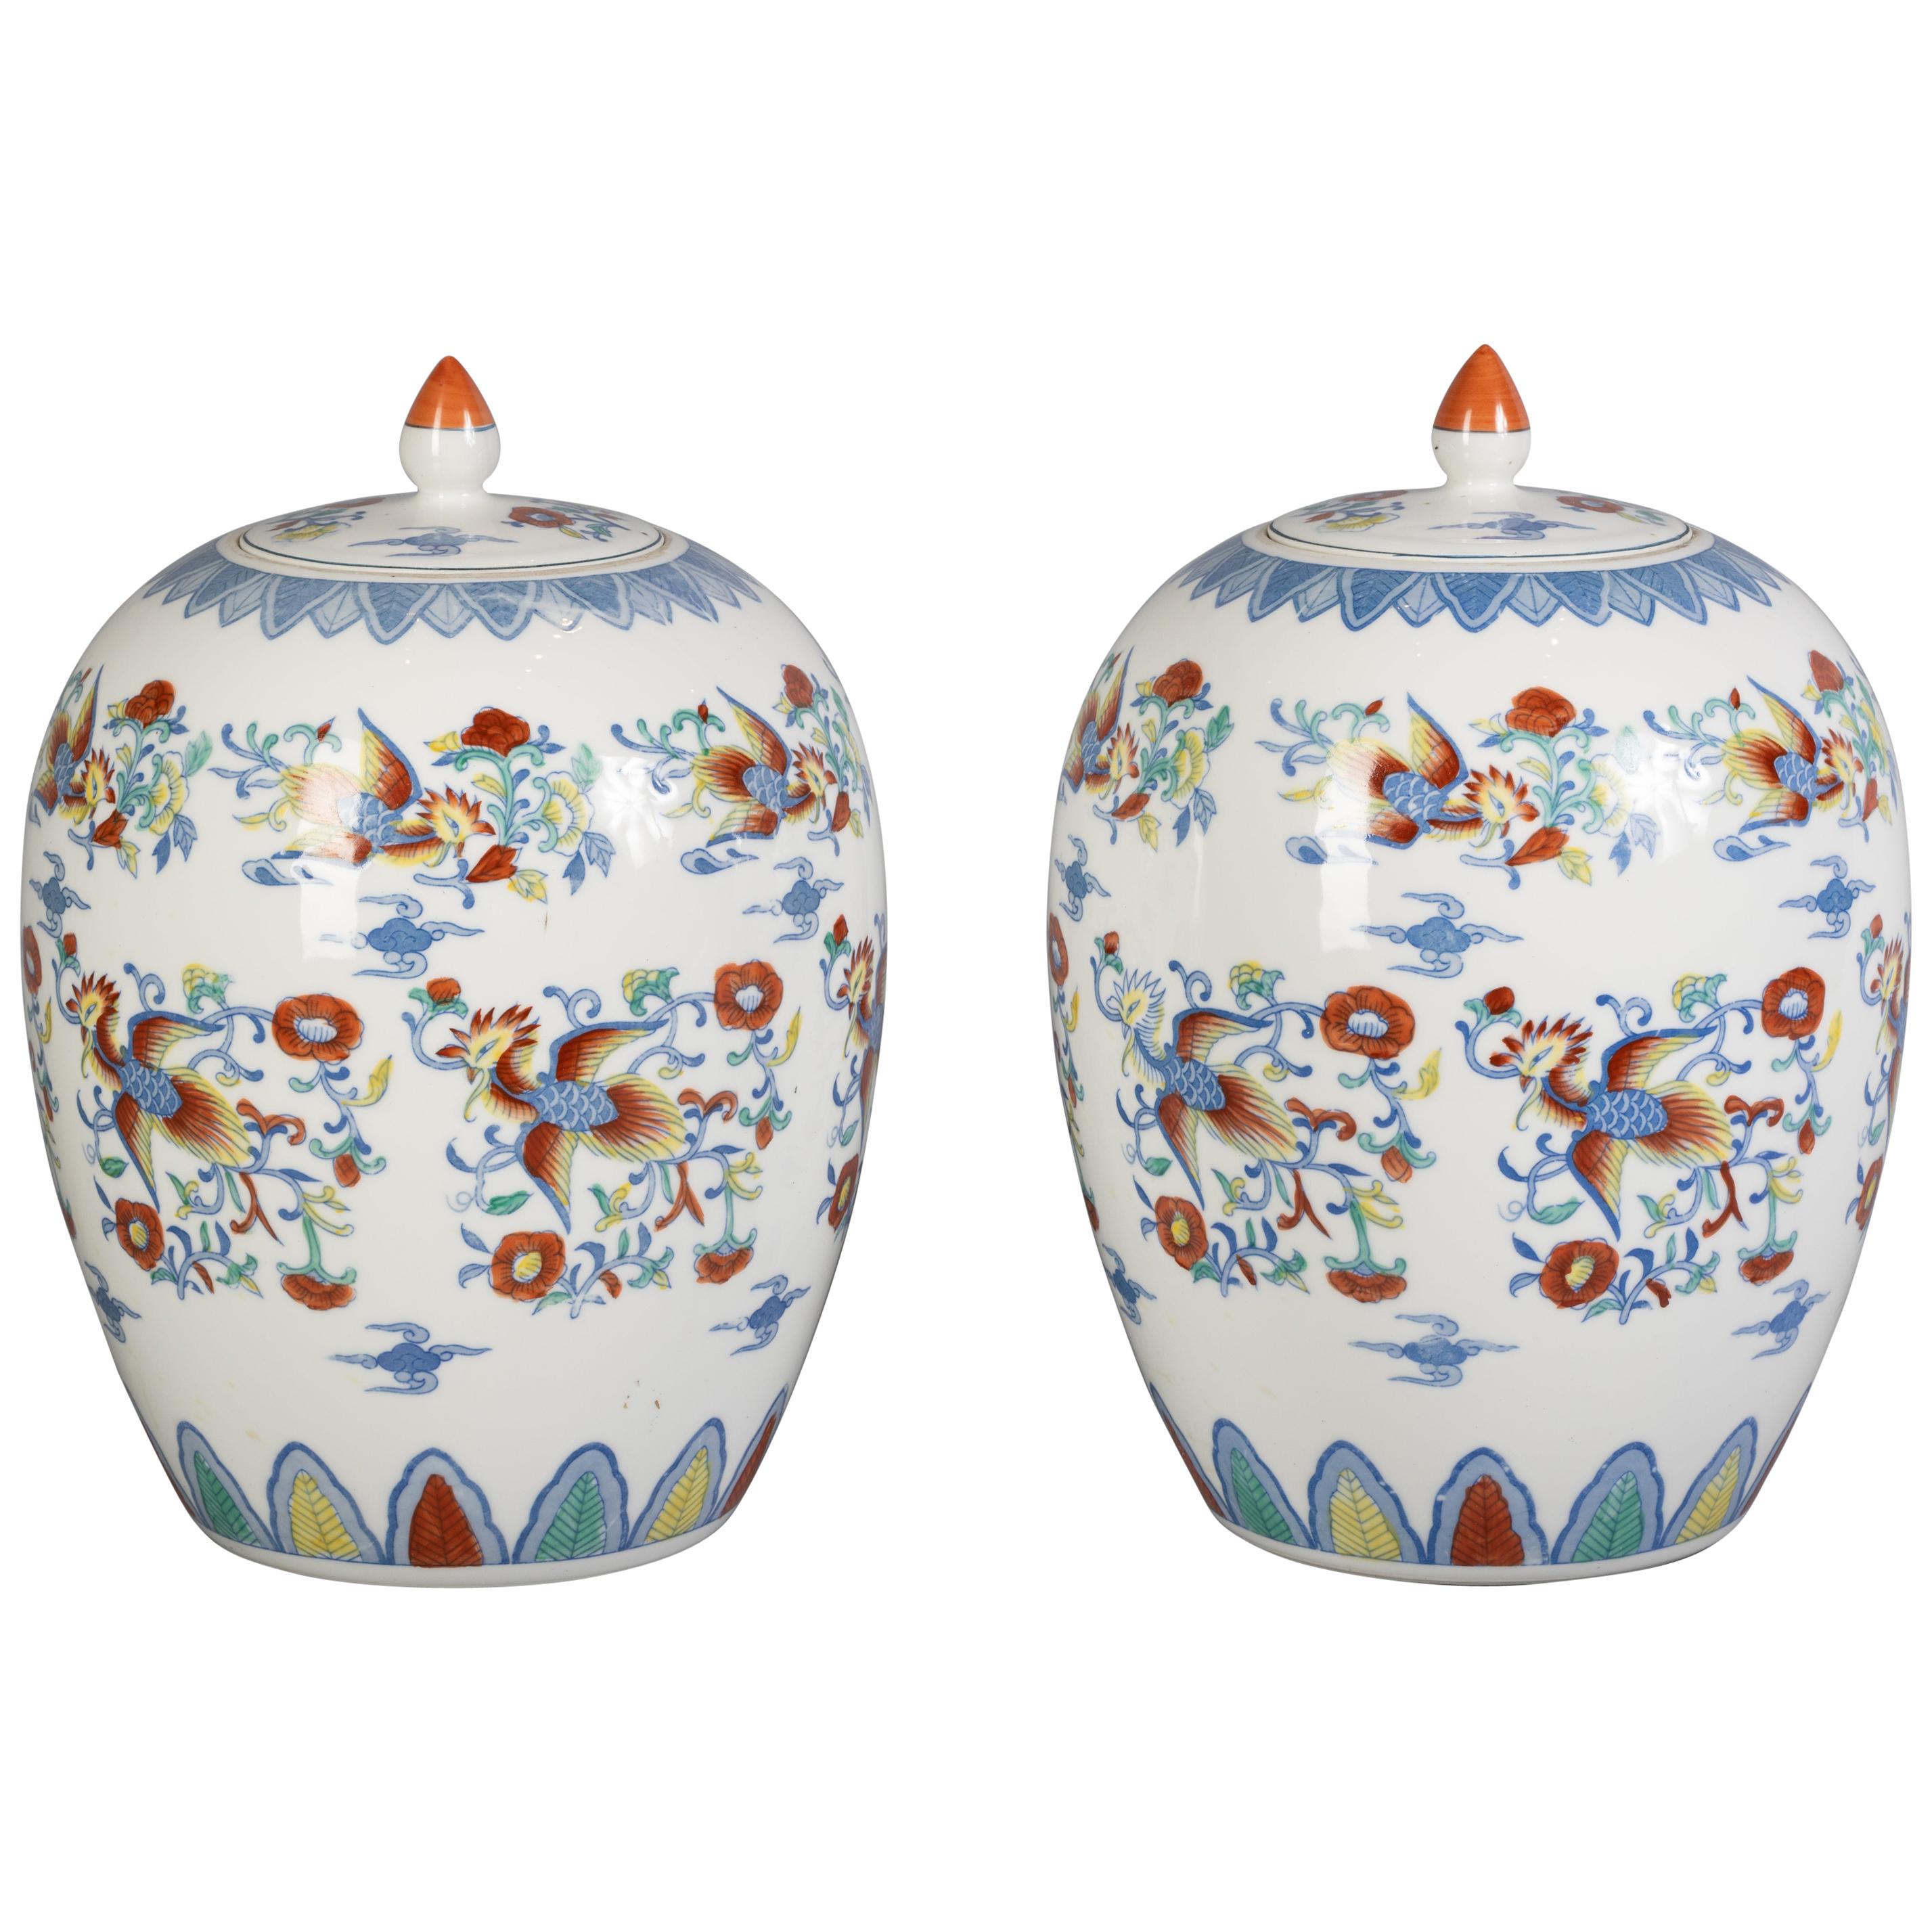 Pair of Japanese Porcelain Lidded Jars, circa 1900